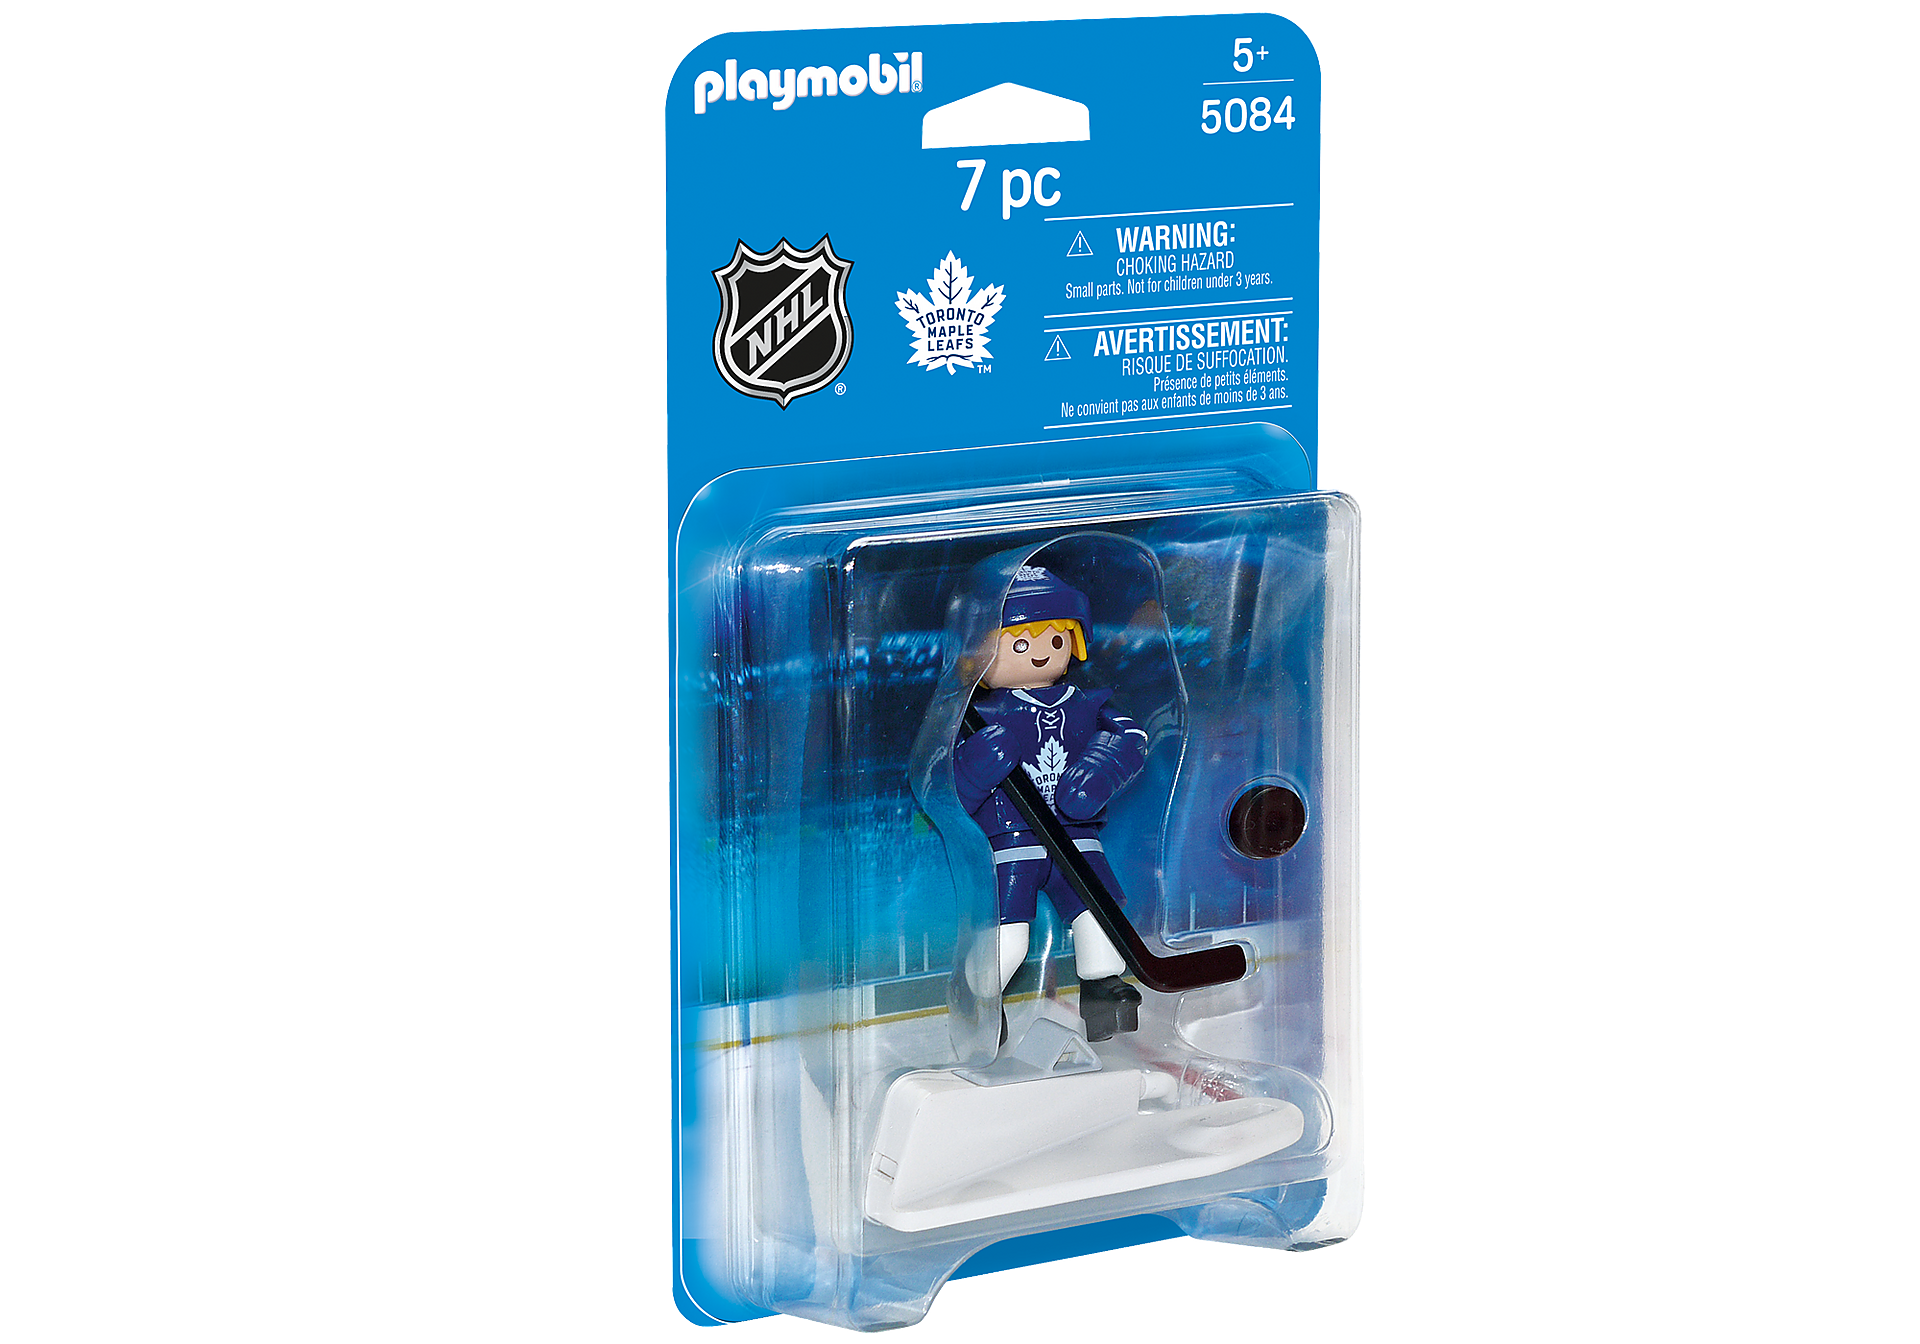 5084 NHL™ Toronto Maple Leafs™ joueur zoom image2